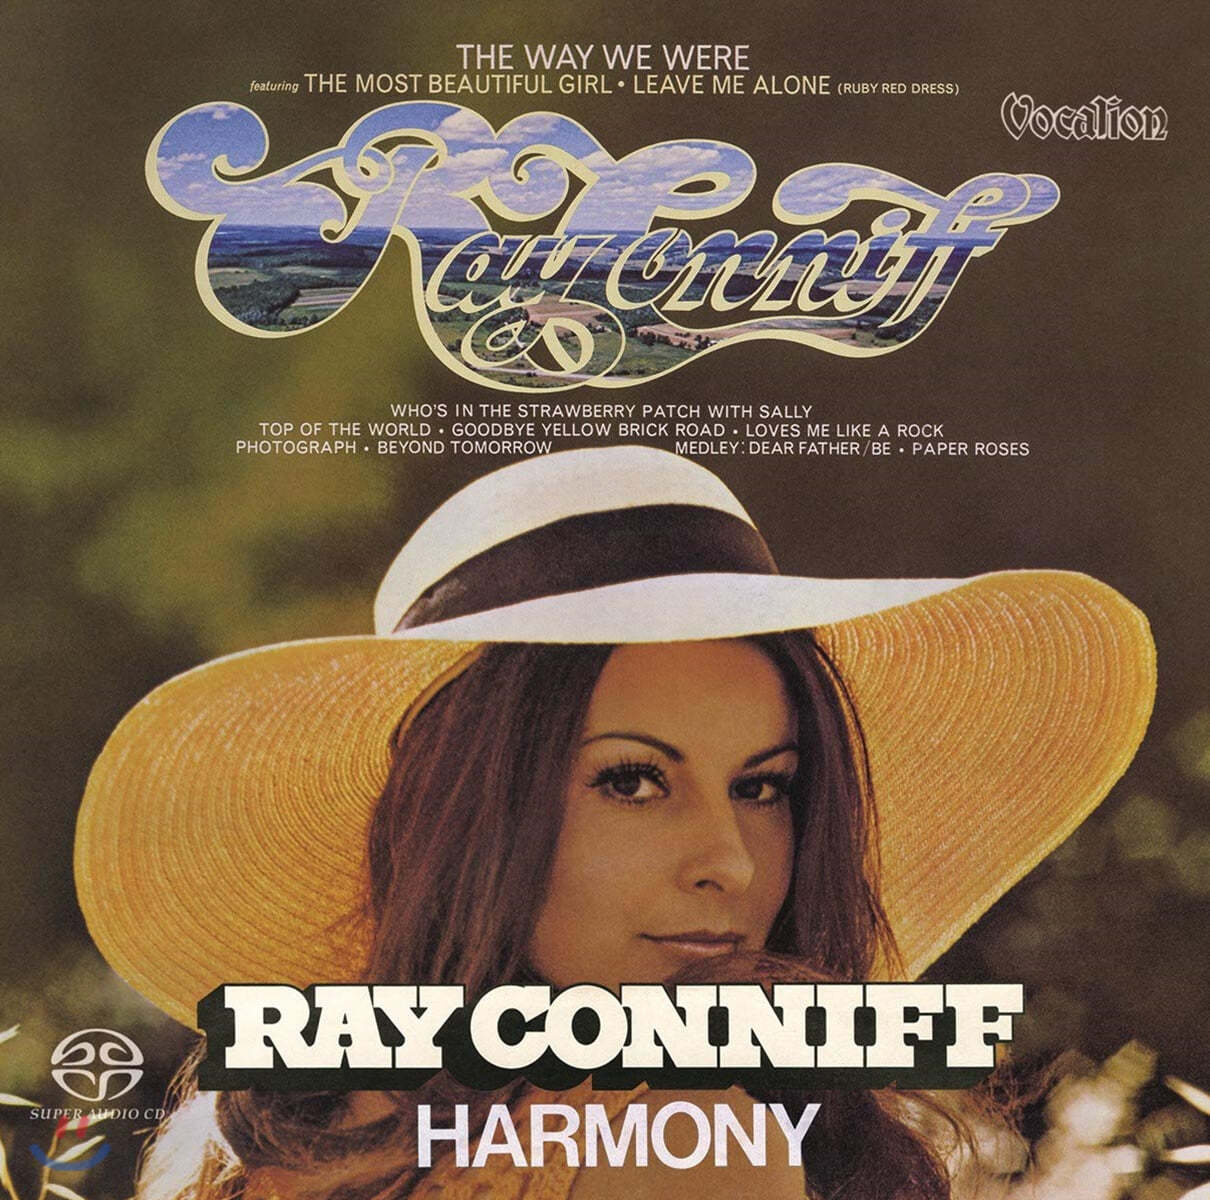 Ray Conniff (레이 코니프) - Harmony &amp; The Way We Were (Original Analog Remastered)